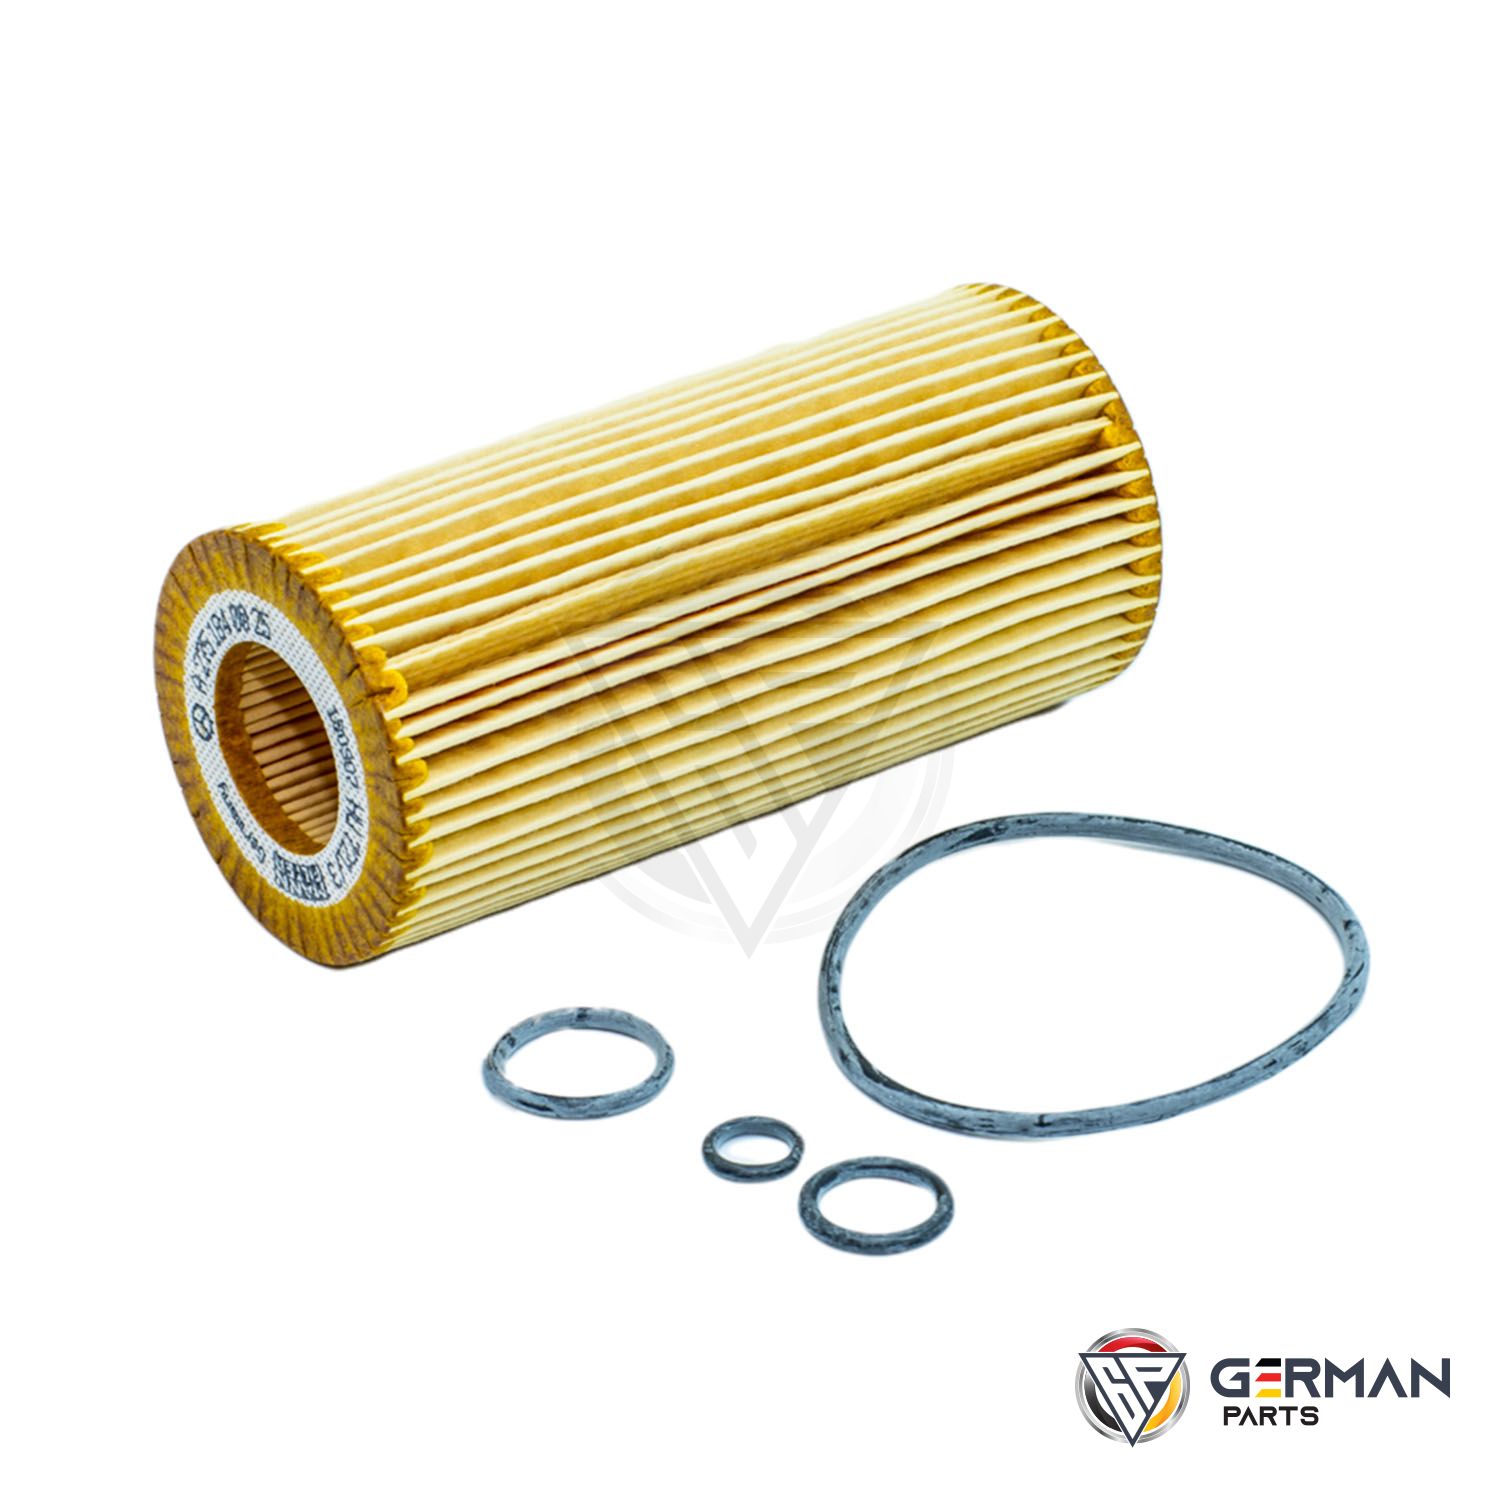 Buy Mercedes Benz Oil Filter 2751800009 - German Parts